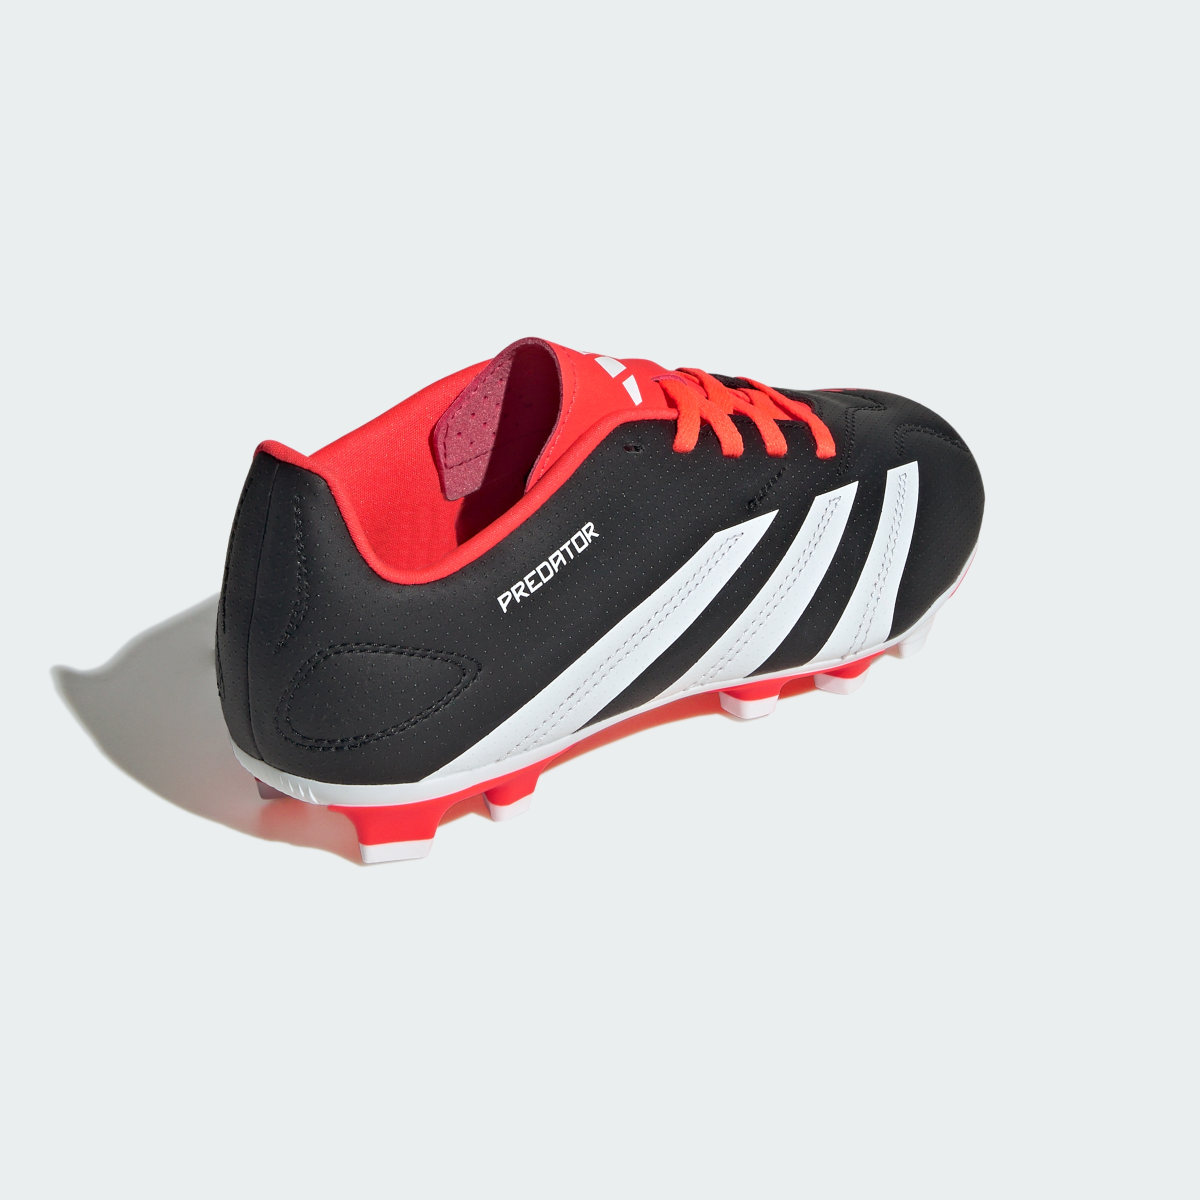 Adidas Predator Club Flexible Ground Football Boots. 6